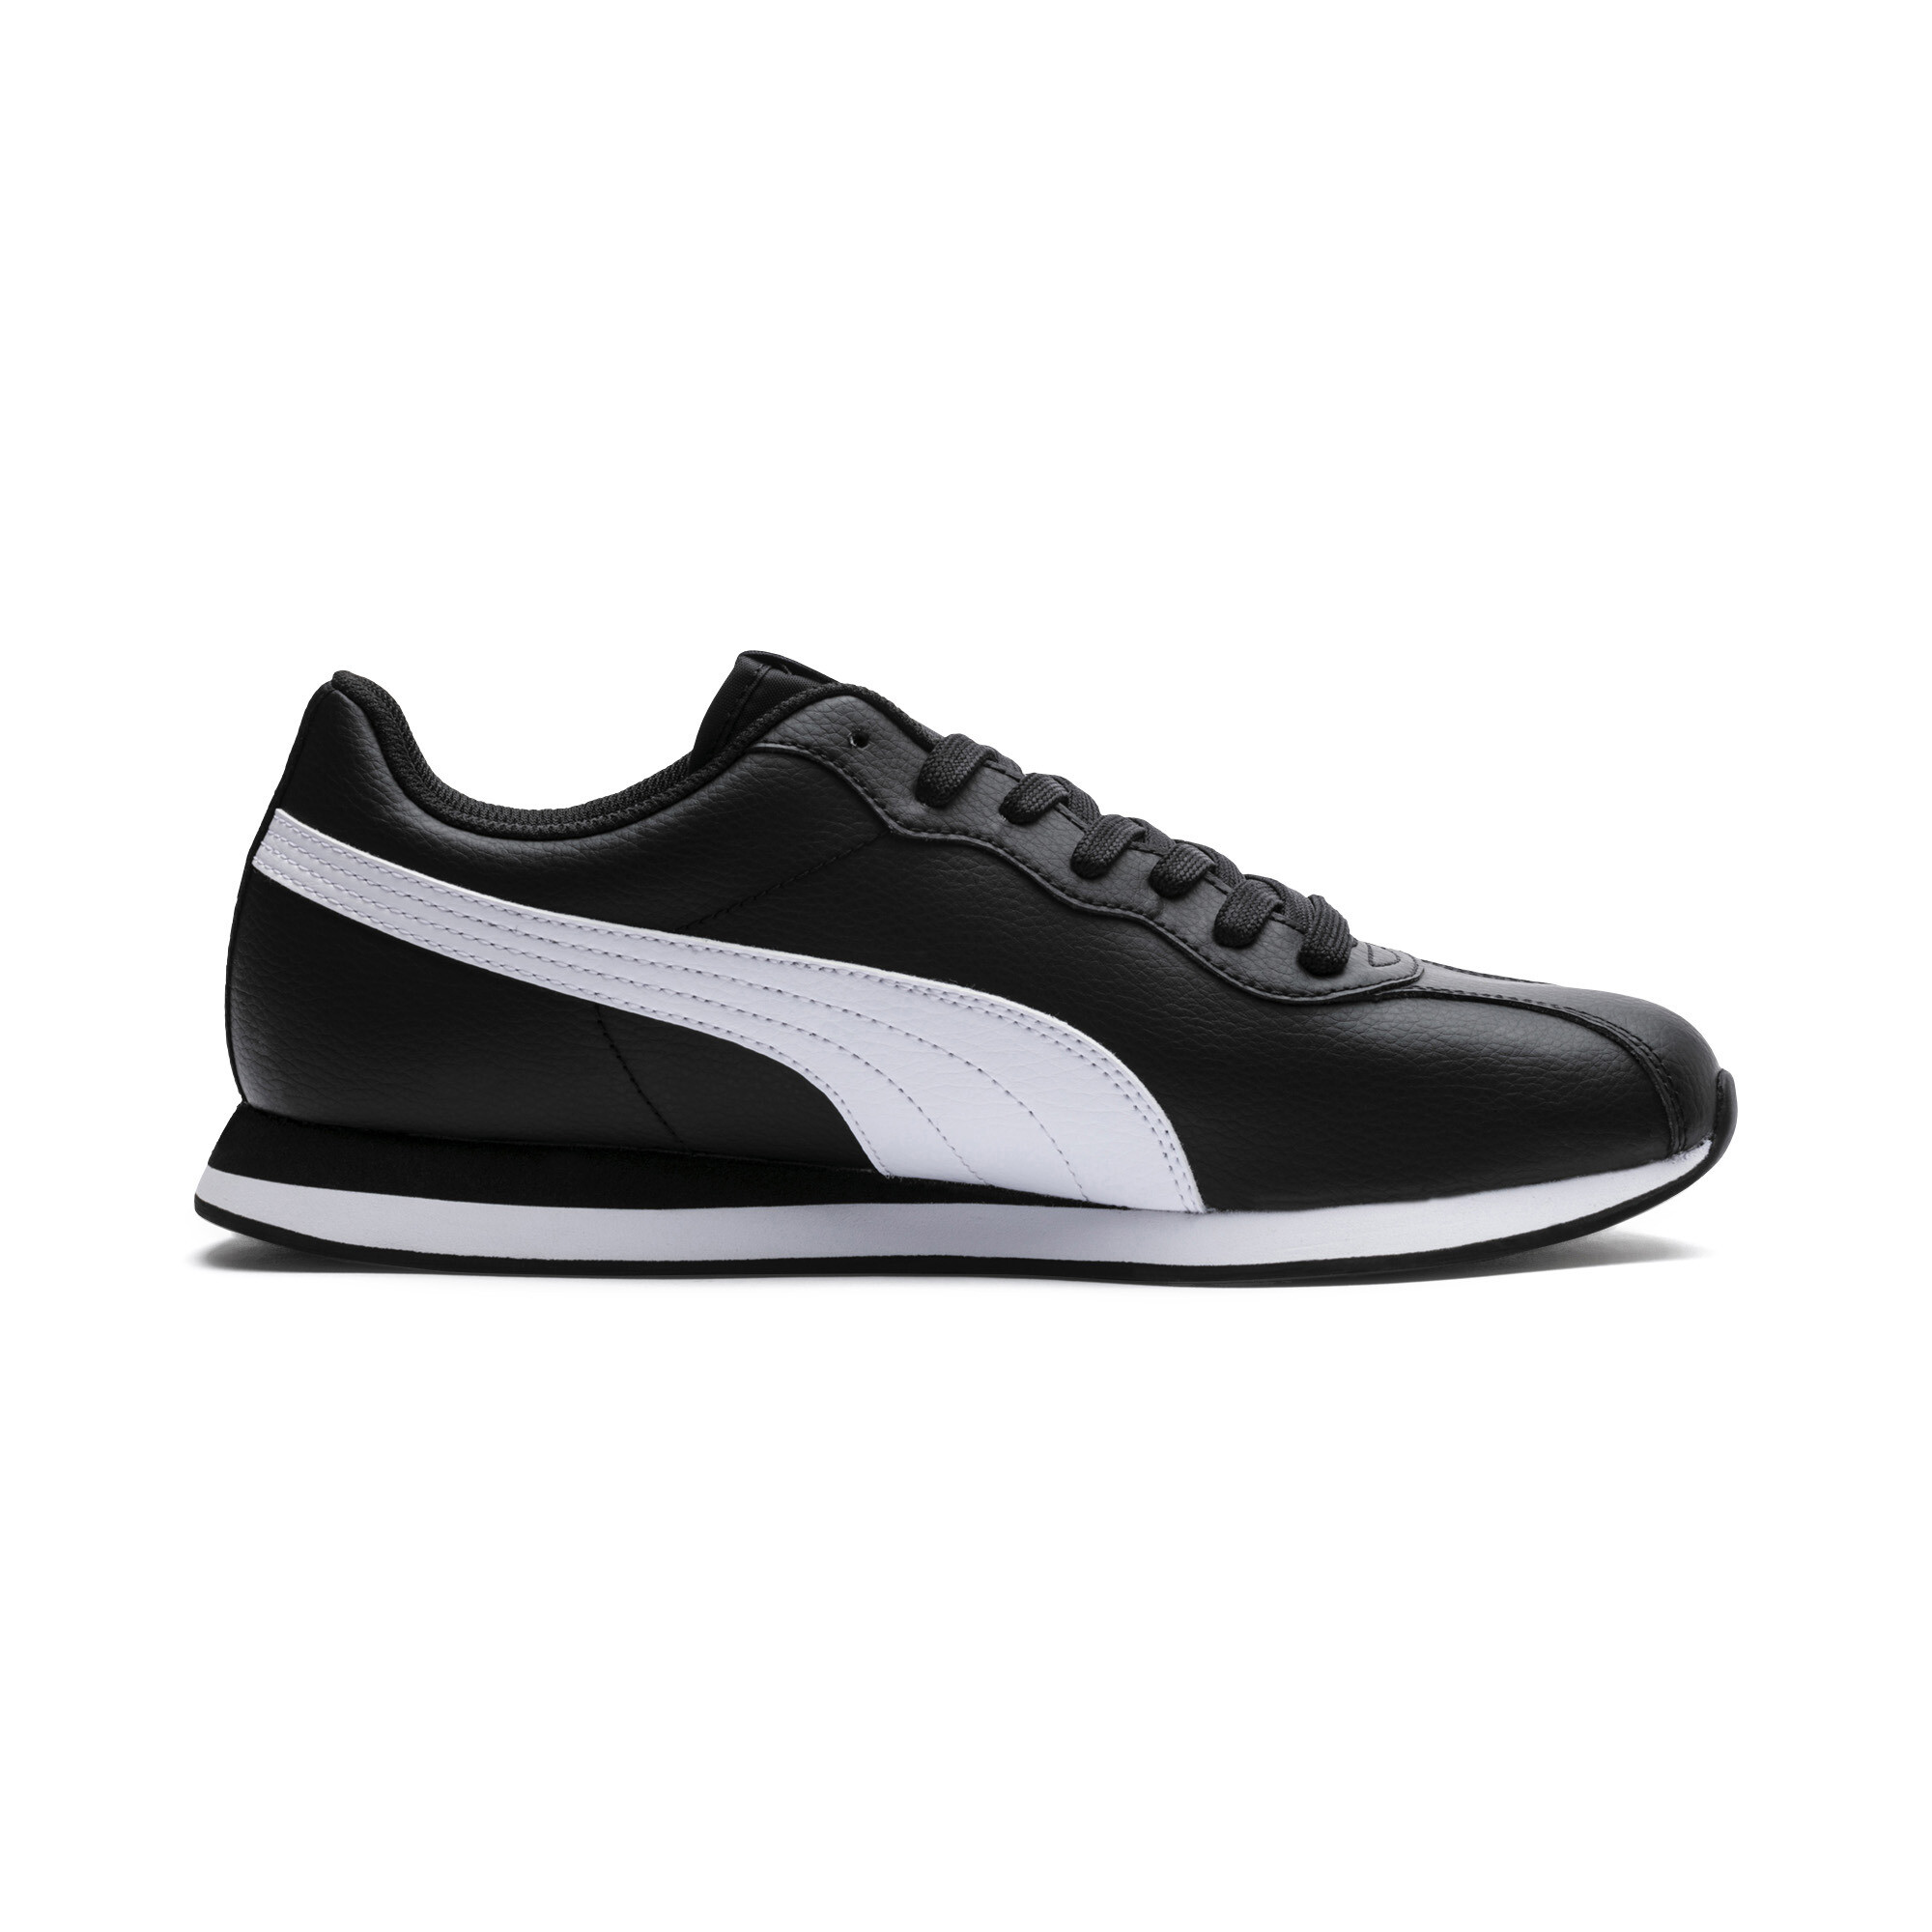 PUMA Turin II Men's Sneakers Men Shoe Basics | eBay